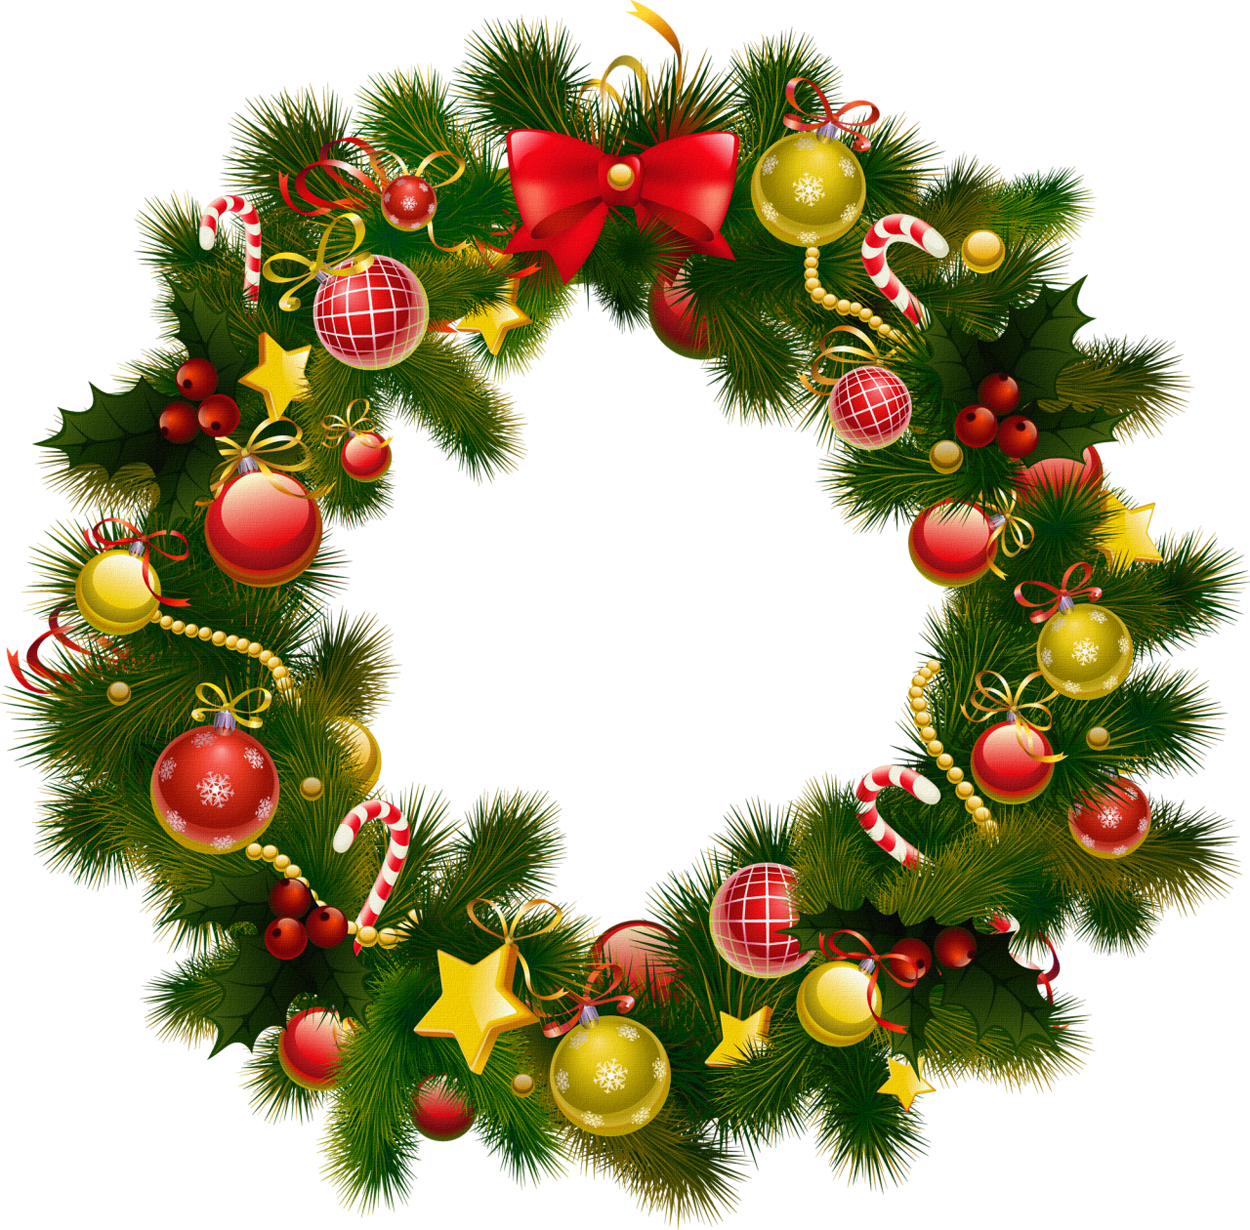 Xmas Stuff For > Free Christmas Wreath Clip Art